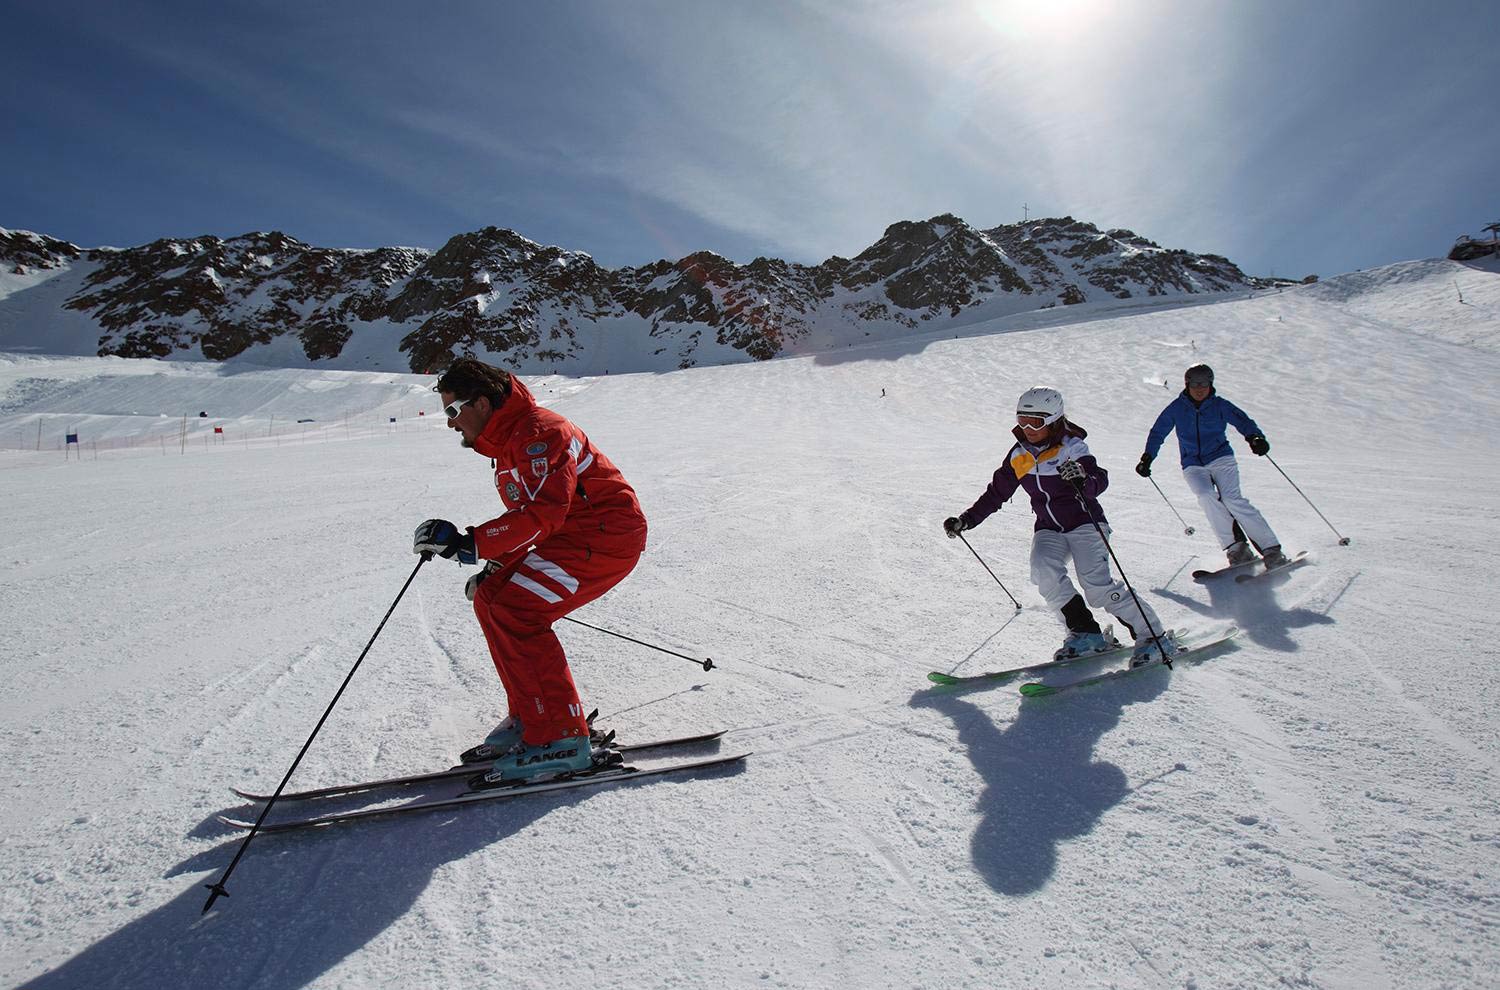 schnalstaler Glacier - ski course for children